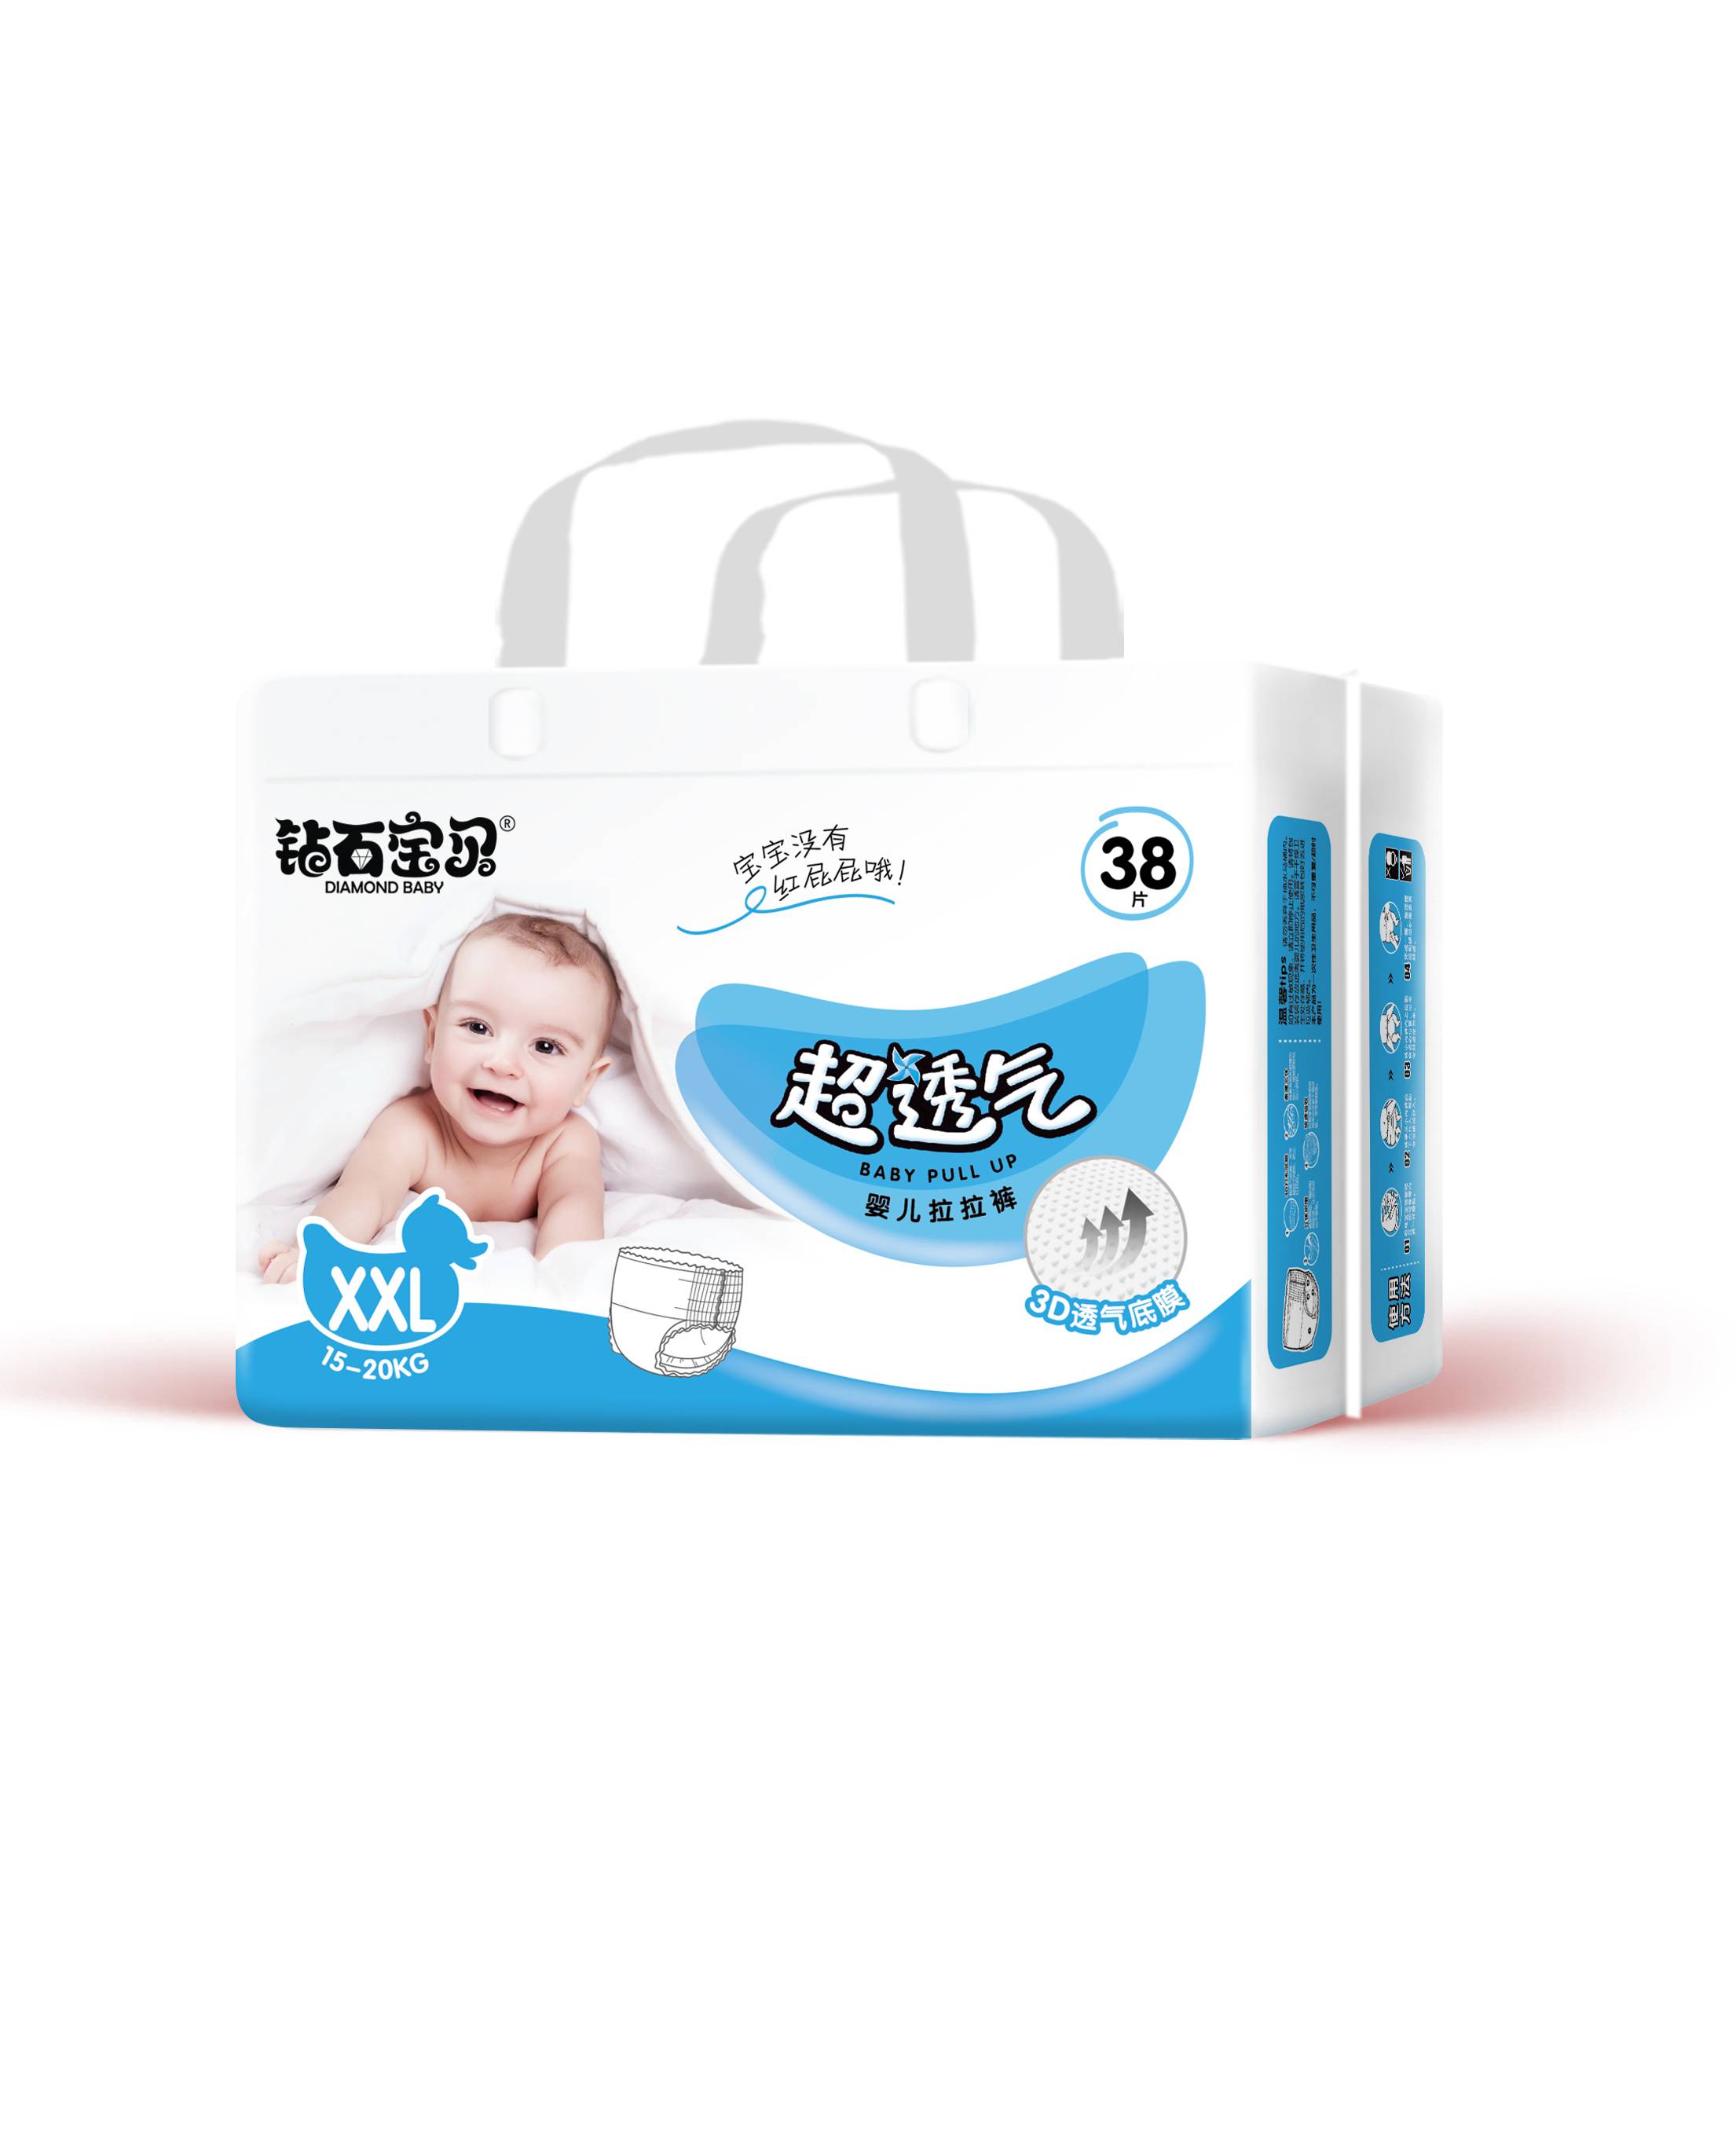 HTB1SgO0Xbr1gK0jSZR0q6zP8XXauHigh-Quality-Comfortable-Best-Price-Baby-Diaper